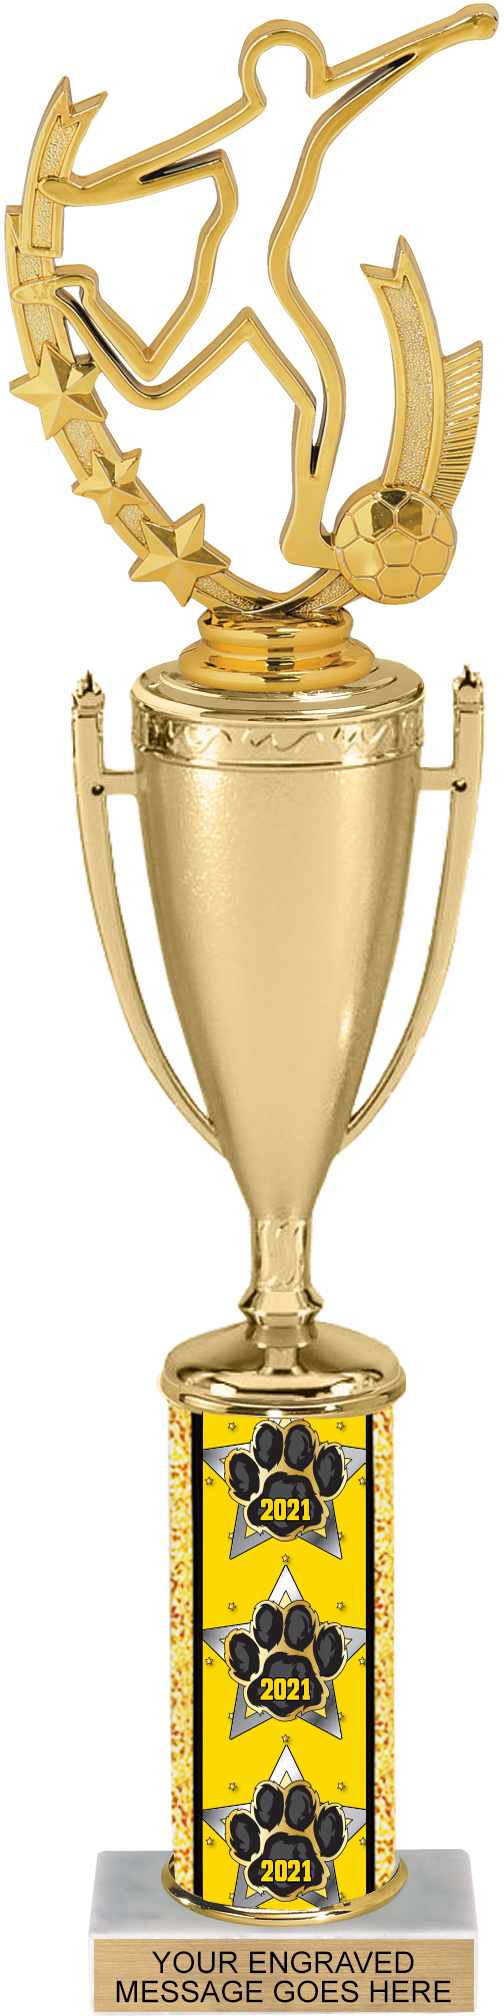 15 inch Year Paw Column Cup Trophy